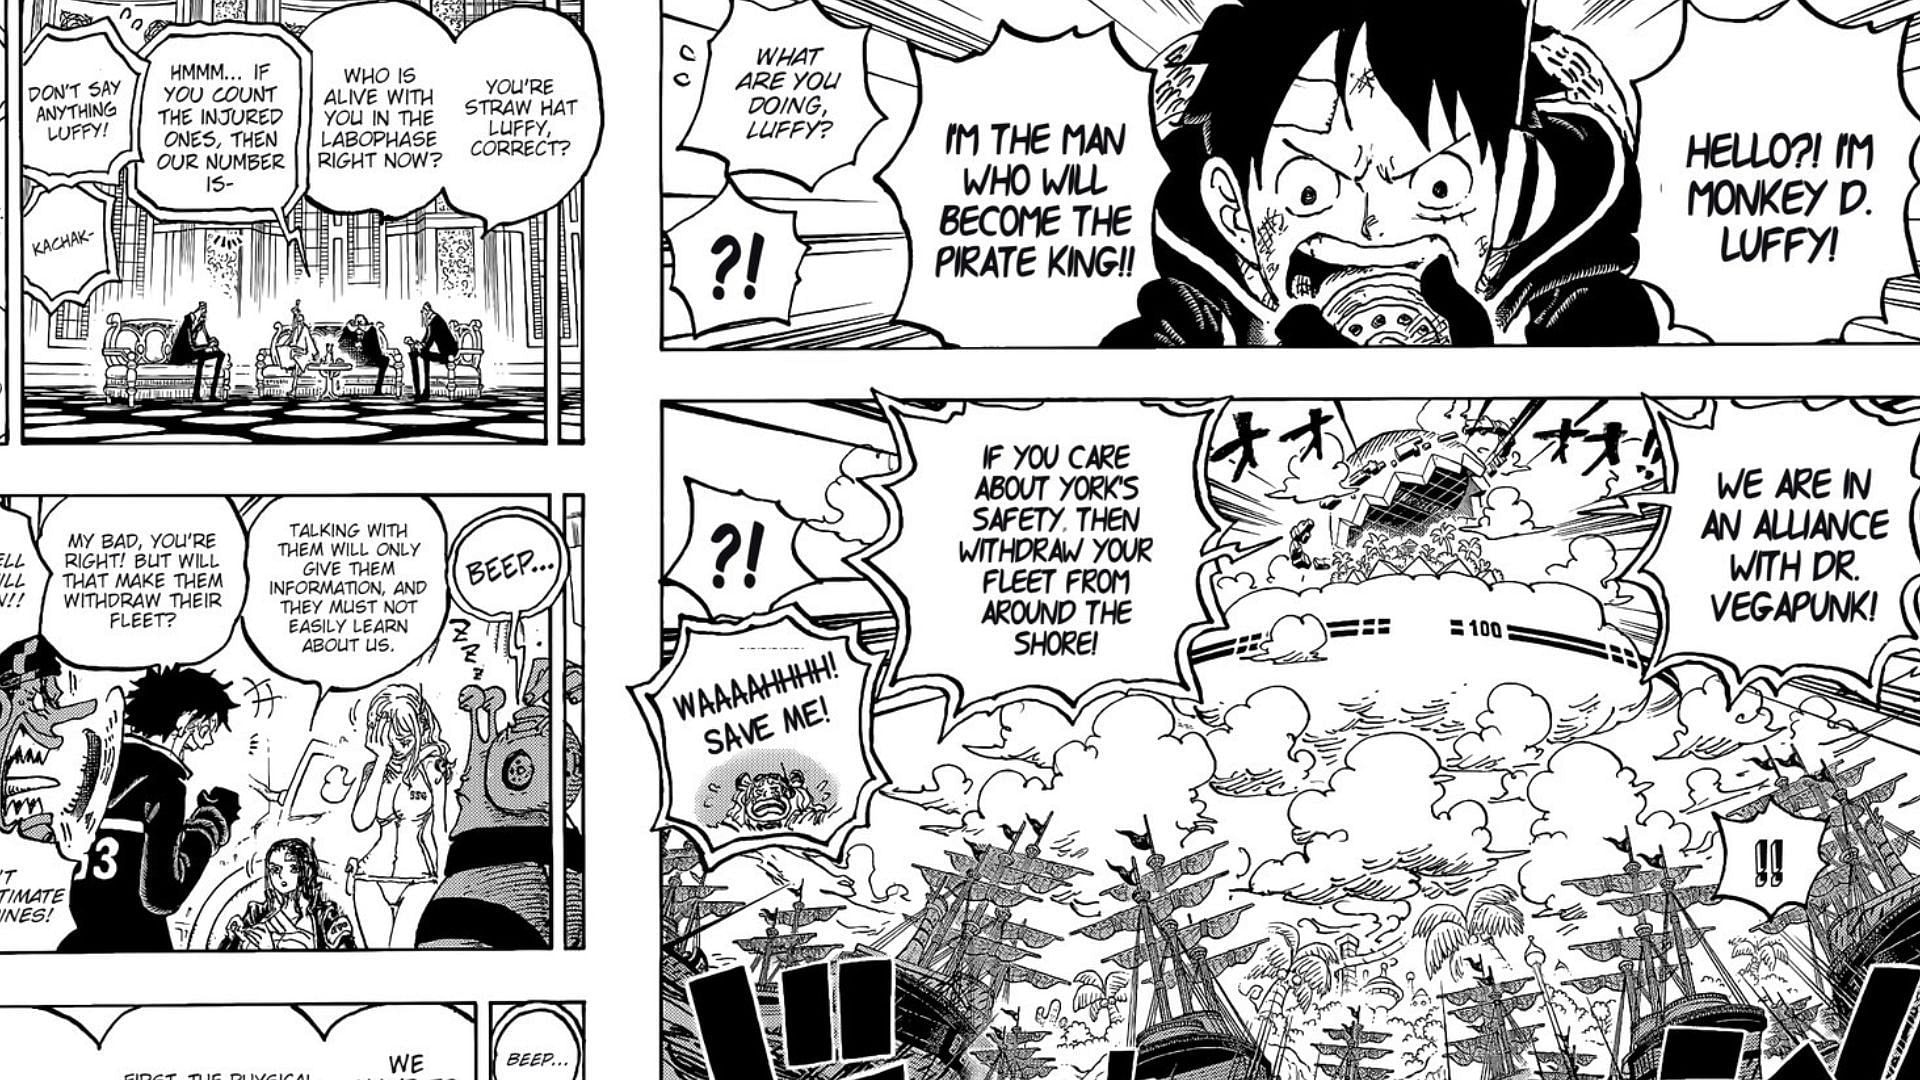 One Piece Chapter 1090 manga panel where Luffy negotiates with the Gorosei (Image via Shueisha)